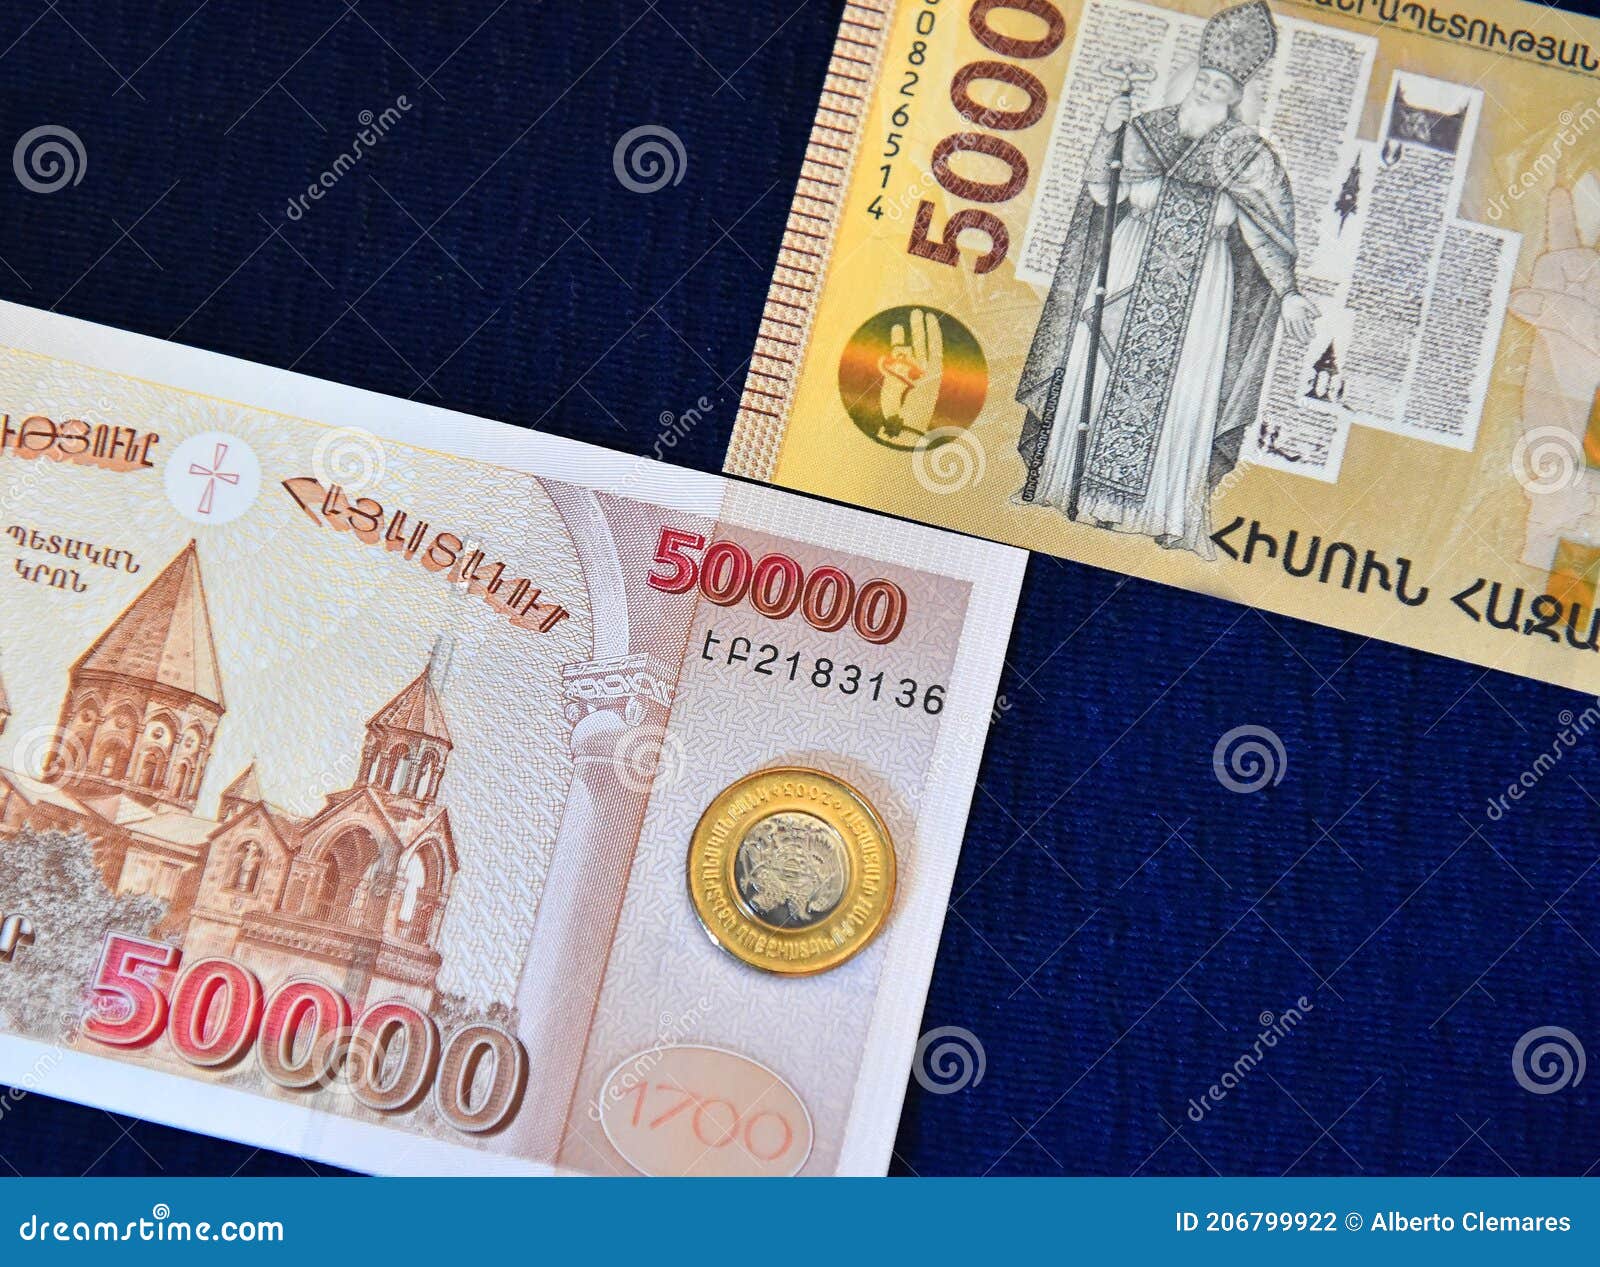 some tenge banknotes of armenia